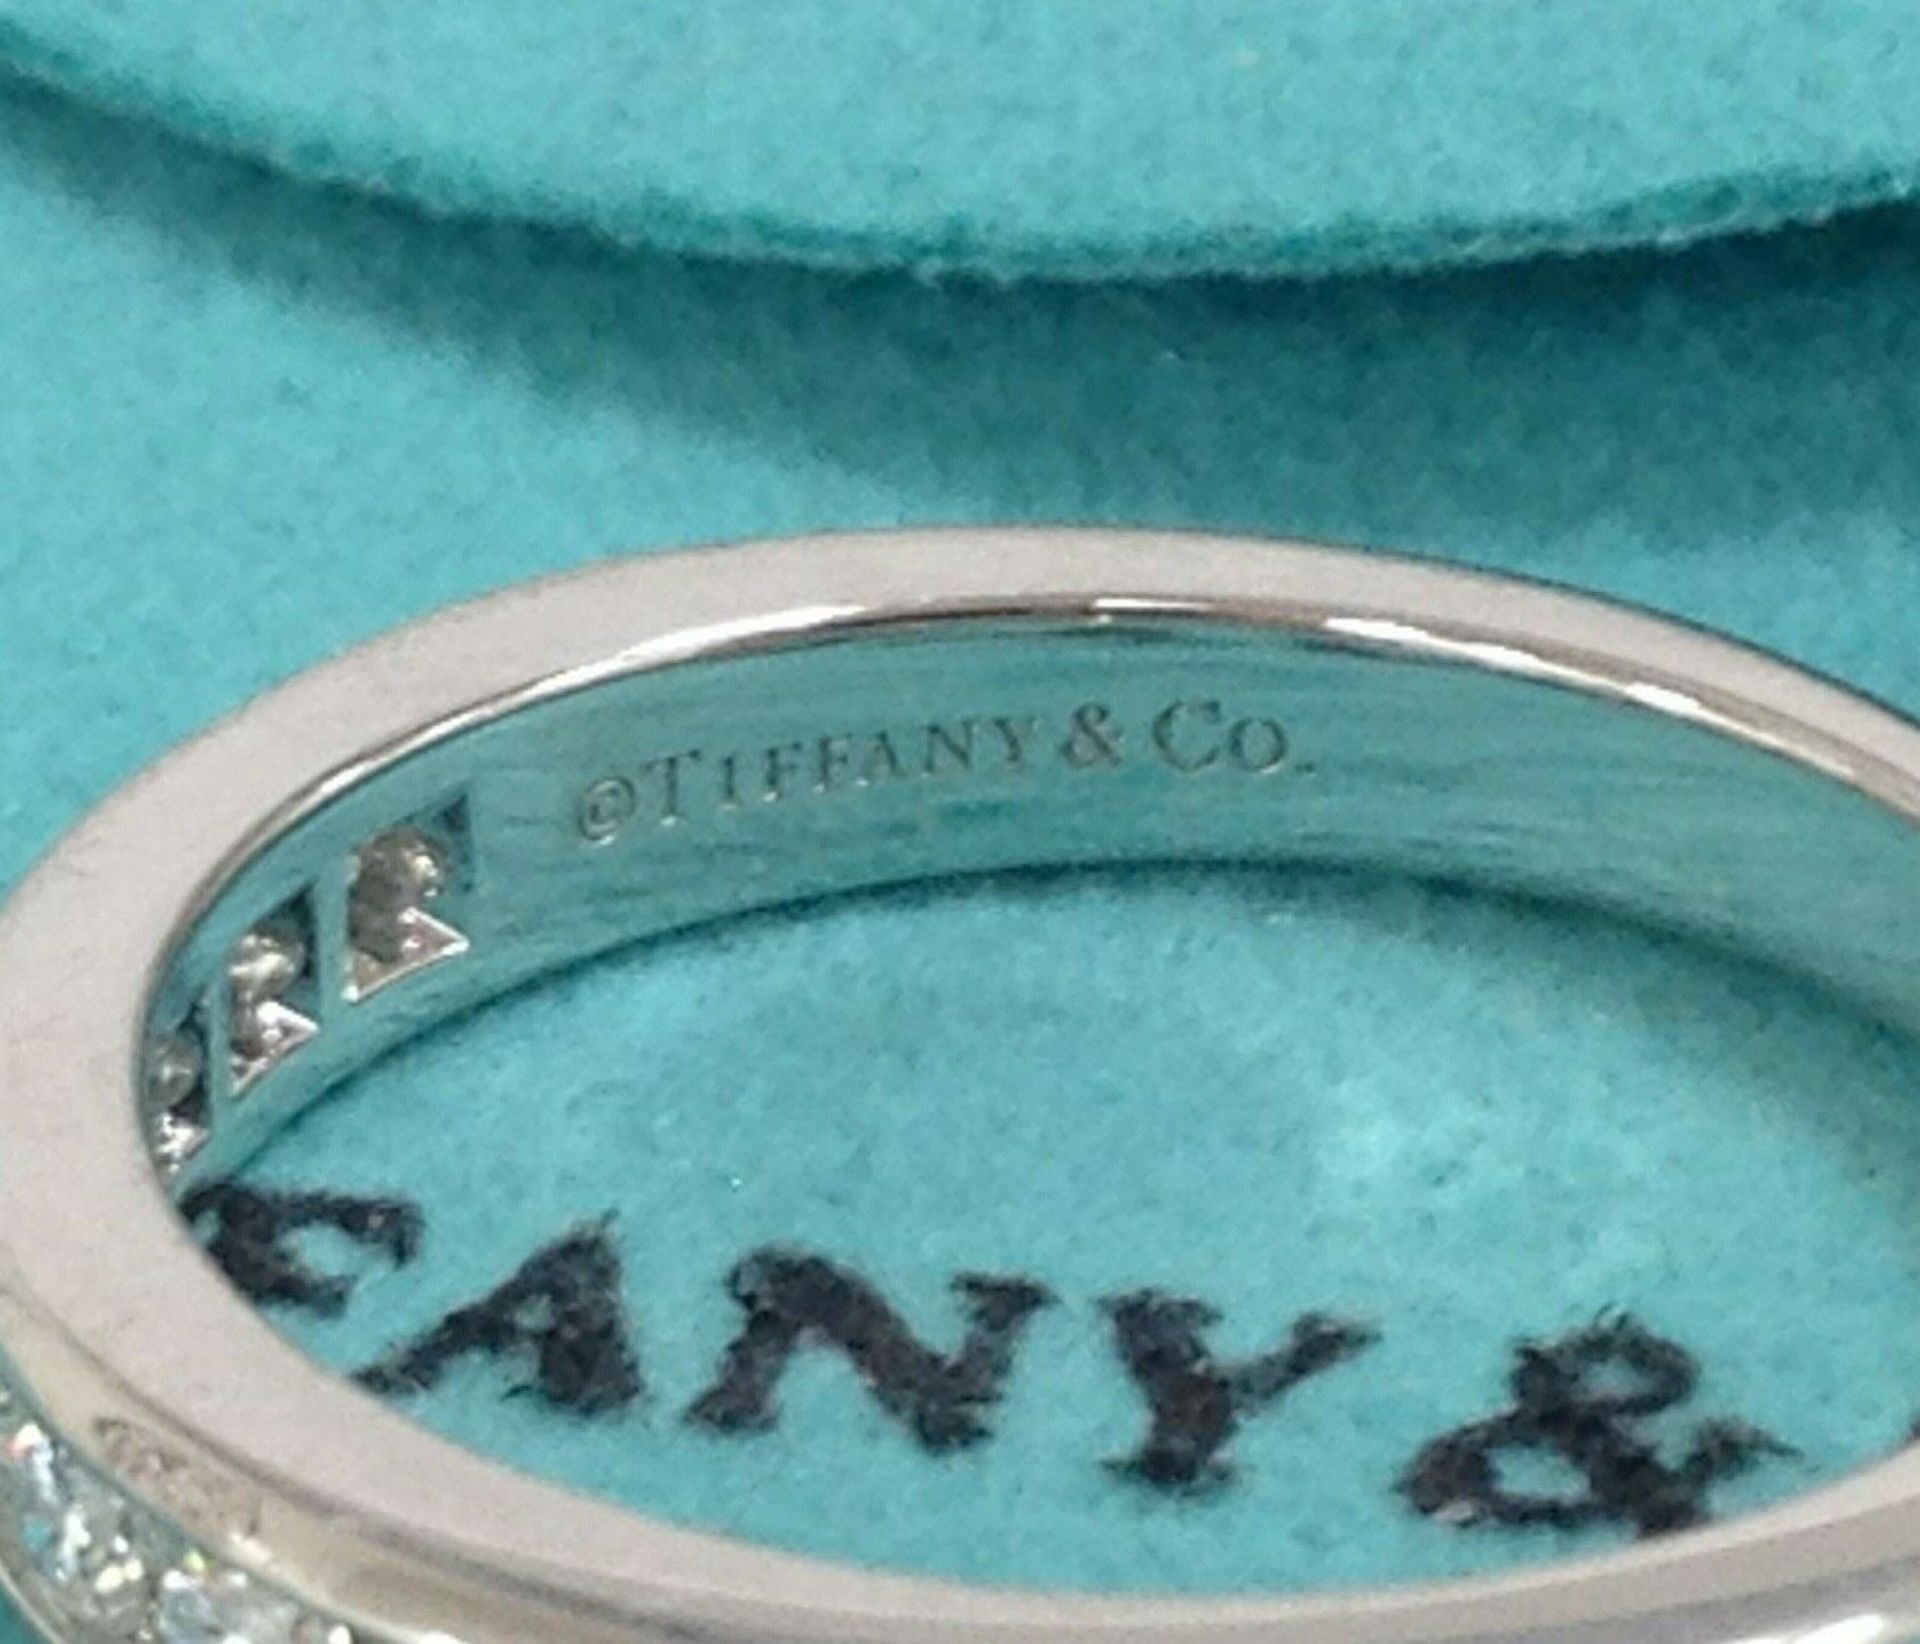 Tiffany & Co. 950 Platinum Half Eternity 0.33 CTW Diamond Wedding Ring Band Size 5.75 #R1127 - Image 2 of 6